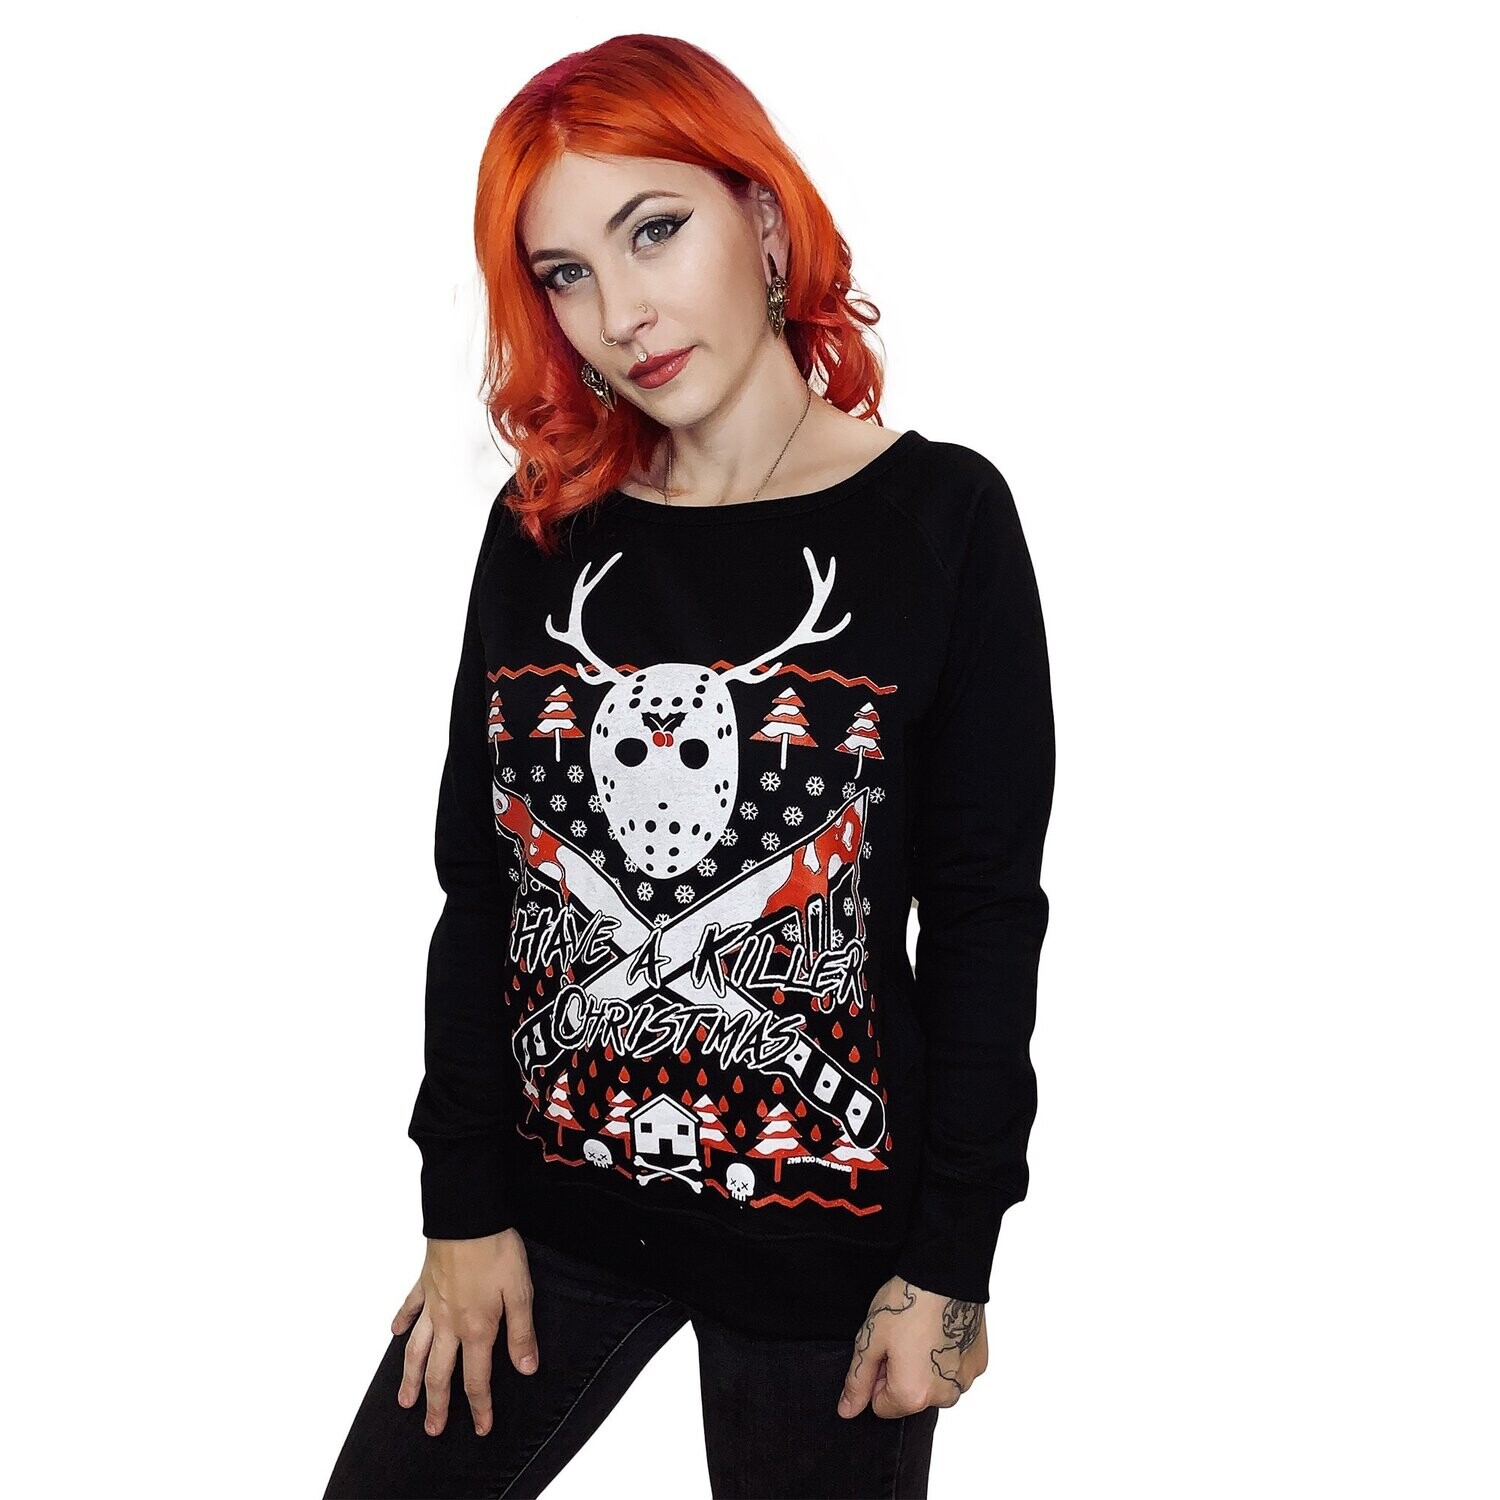 Have A Killer Christmas Horror Sweatshirt